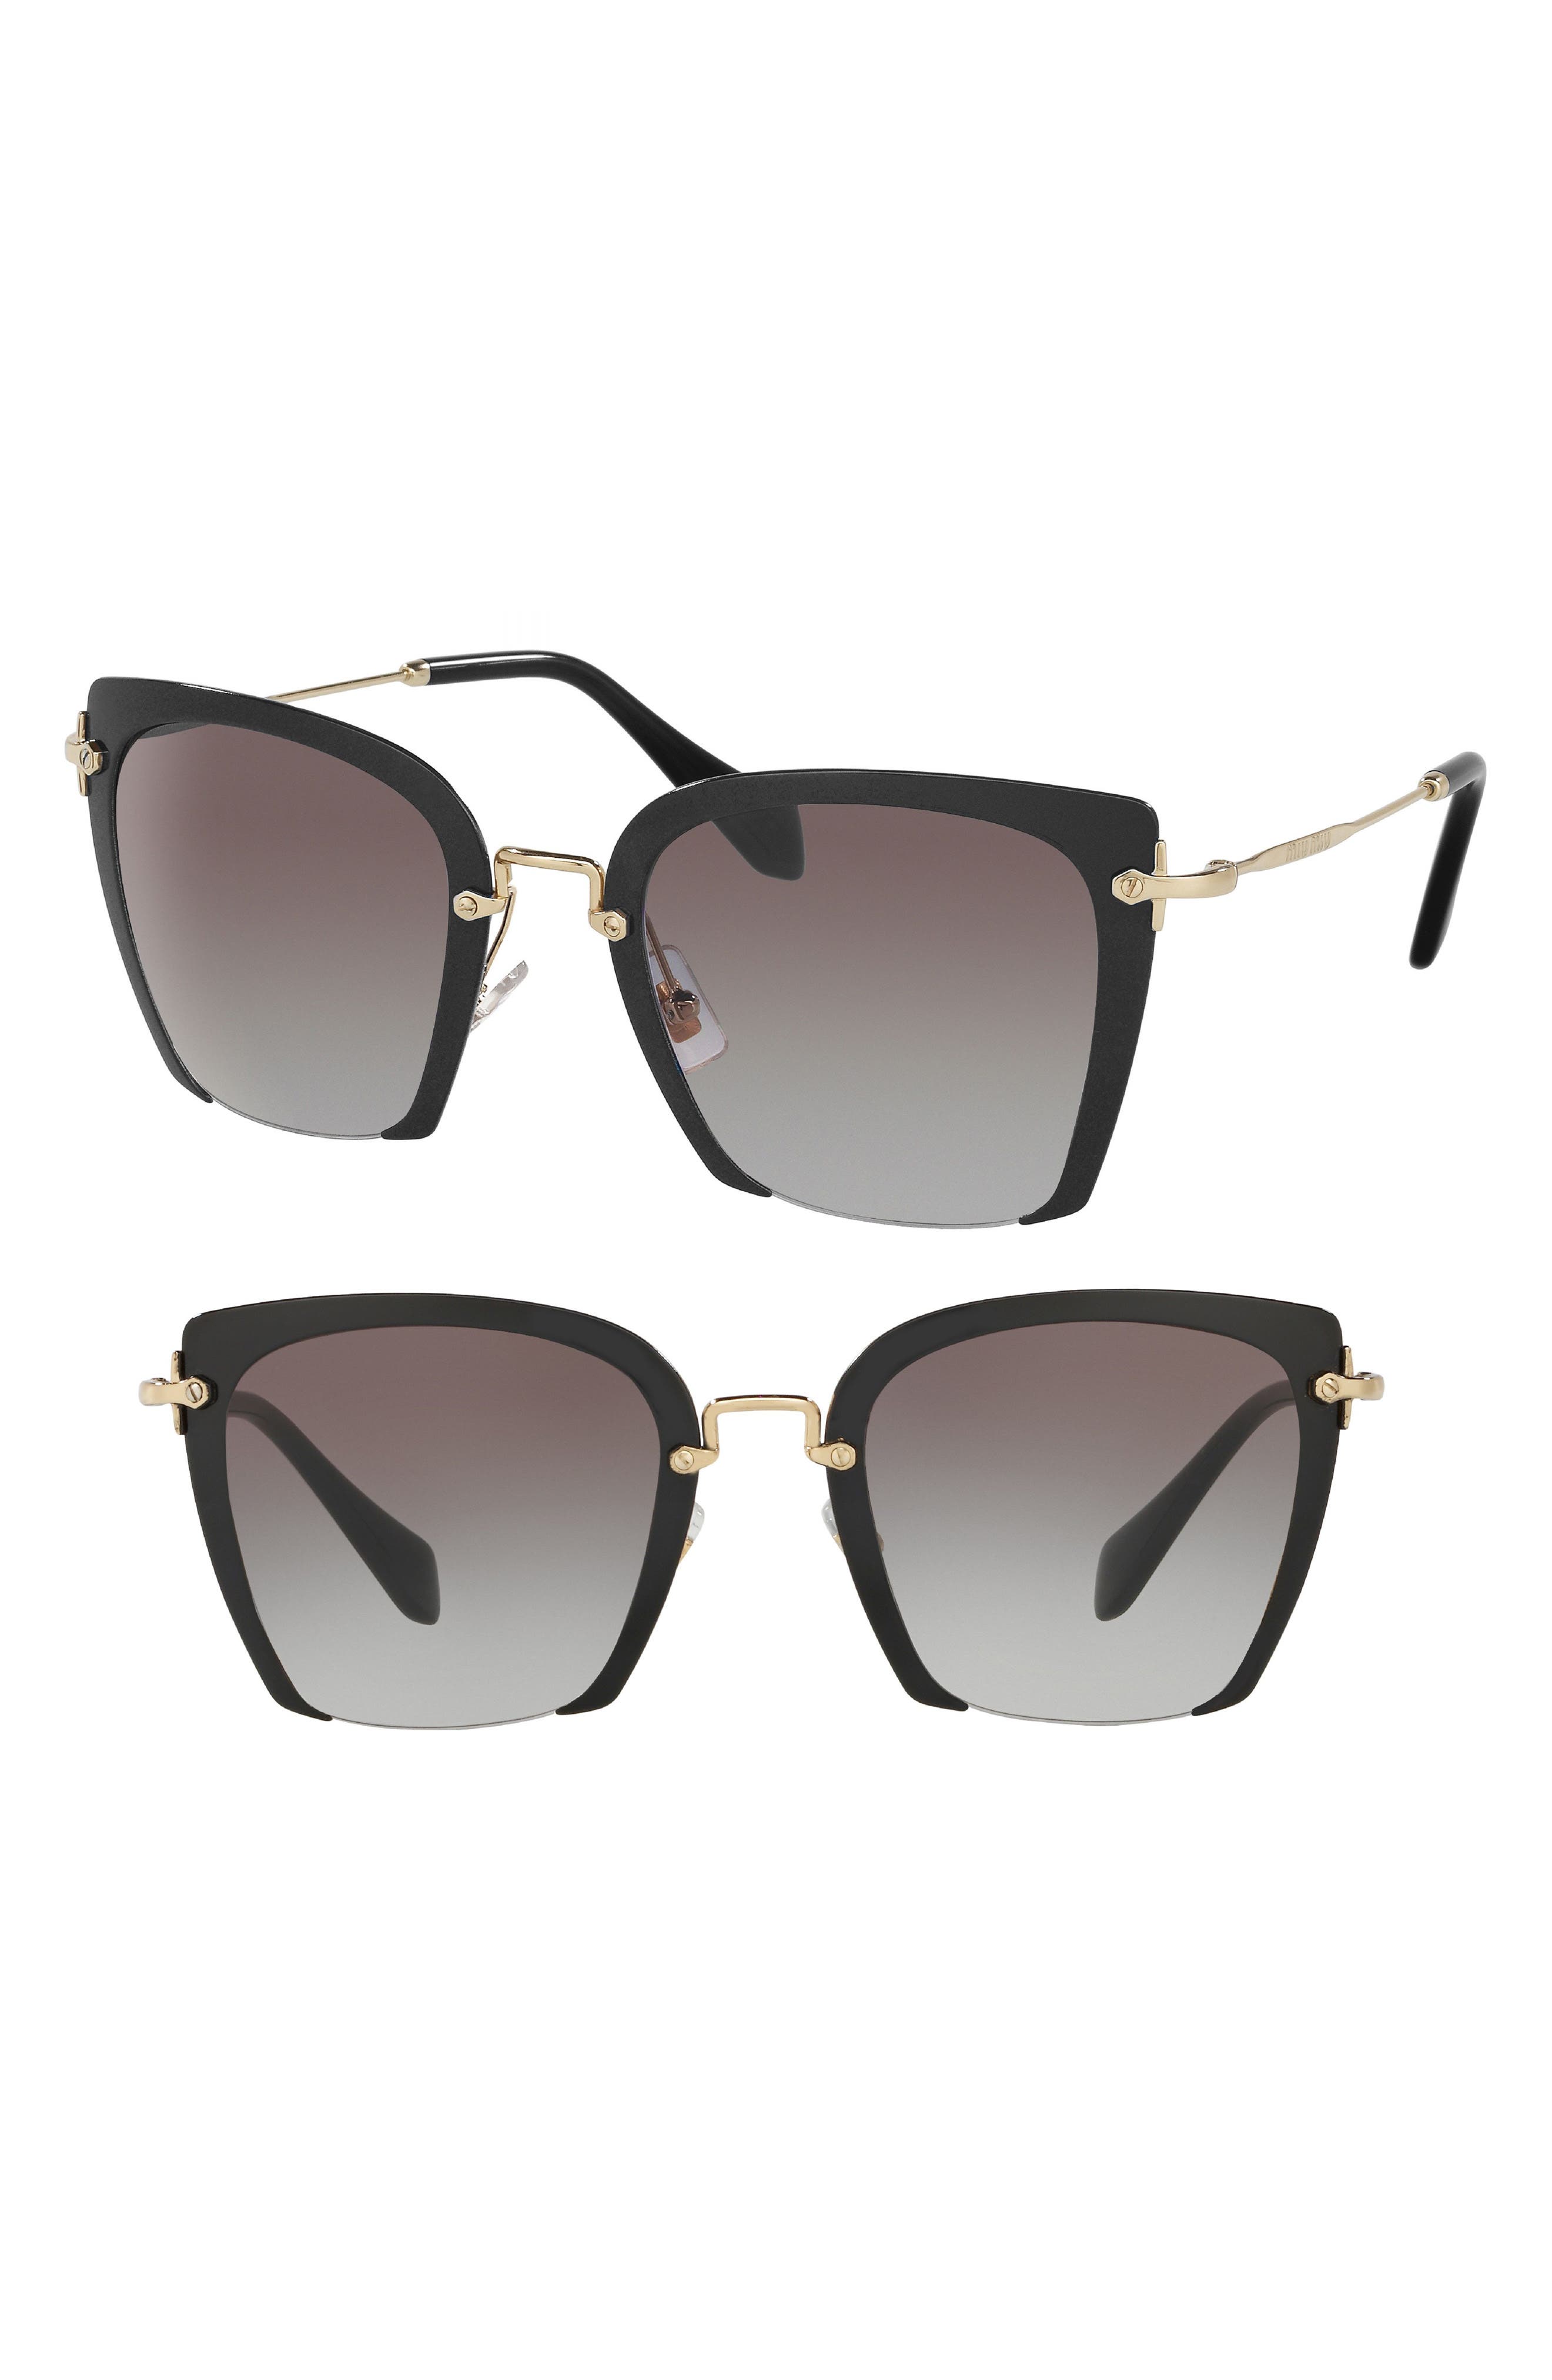 Miu Miu 52mm Semi Rimless Sunglasses in Black at Nordstrom